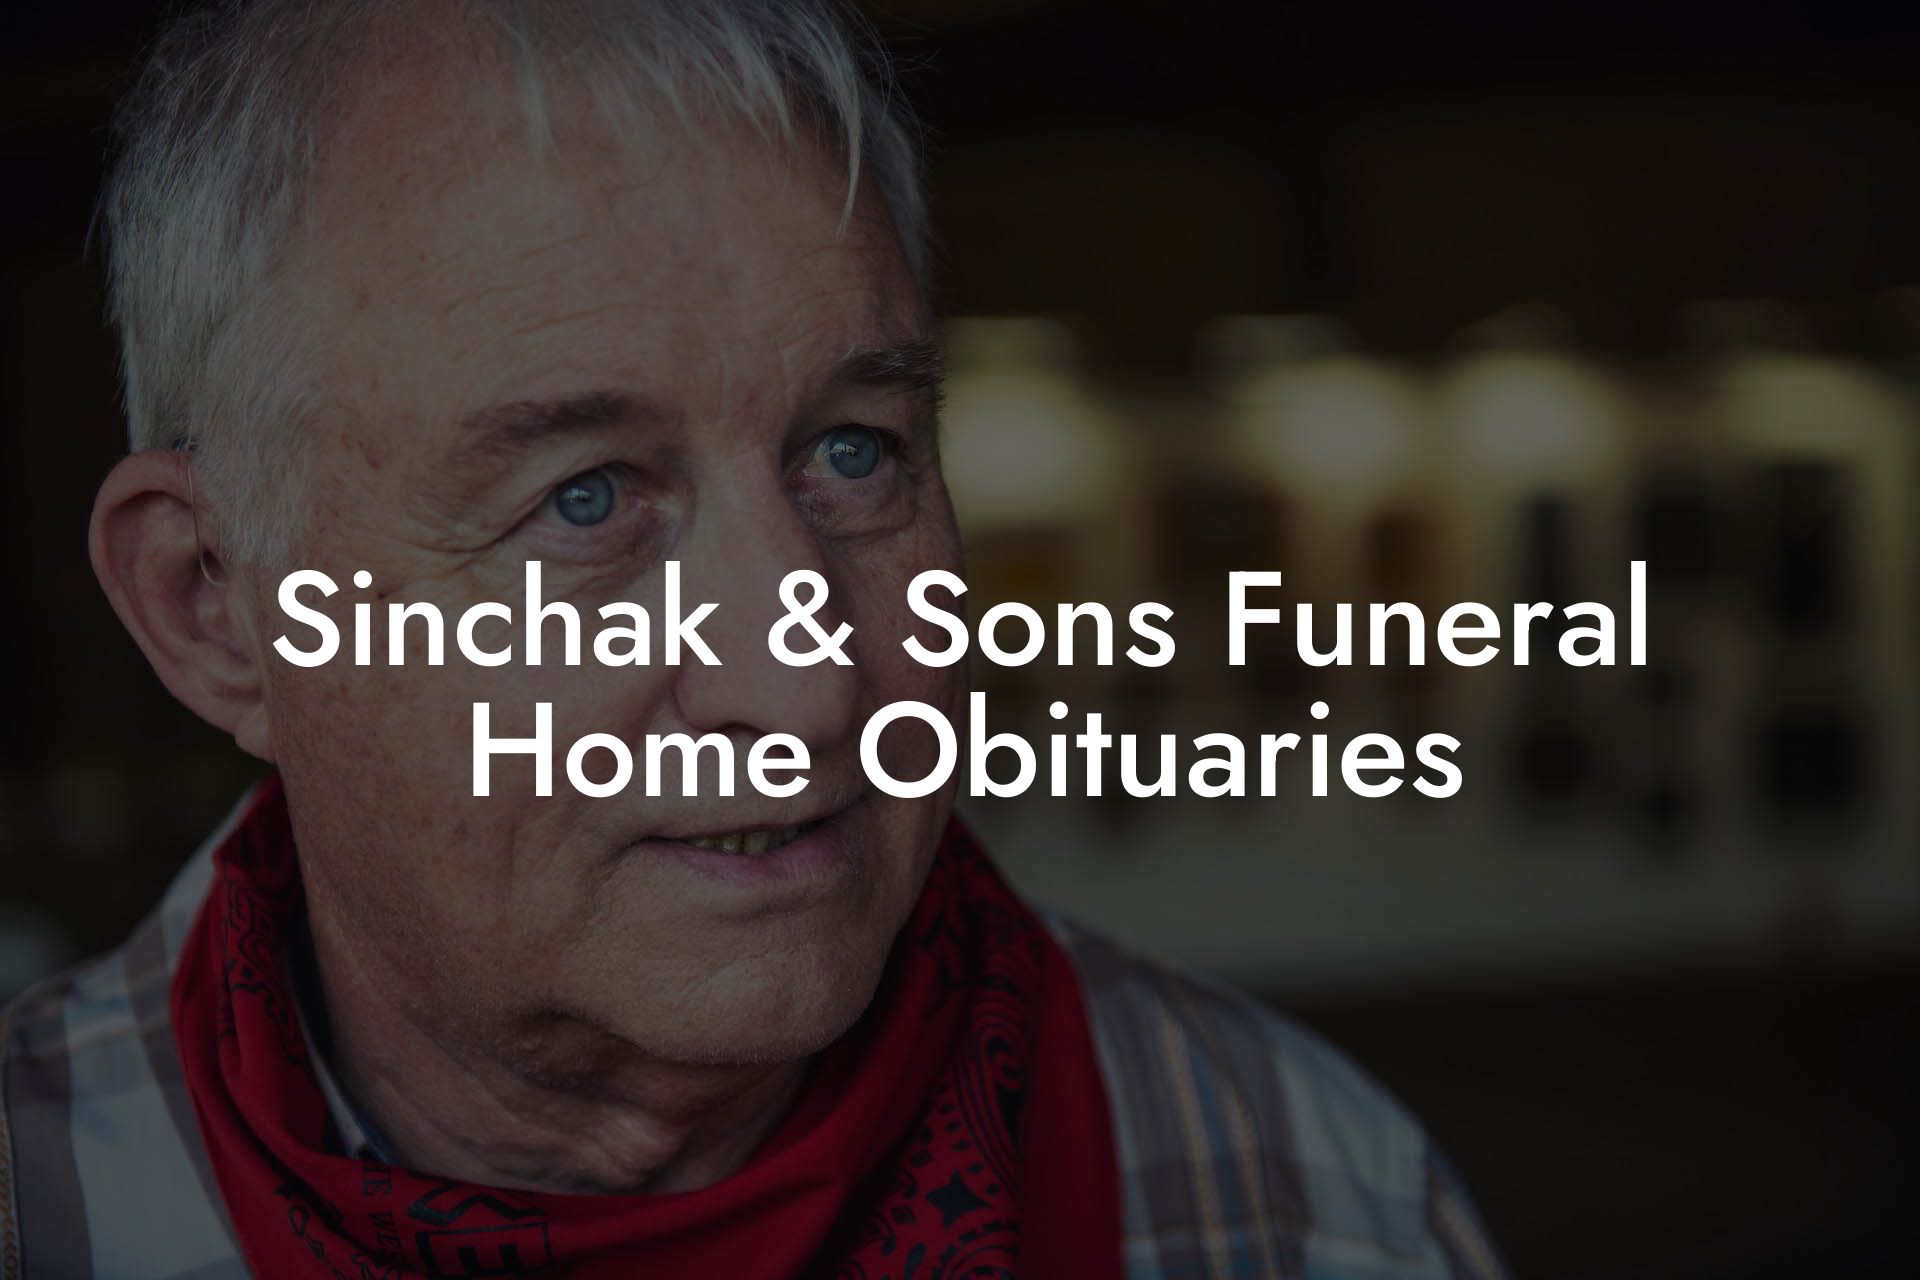 Sinchak & Sons Funeral Home Obituaries